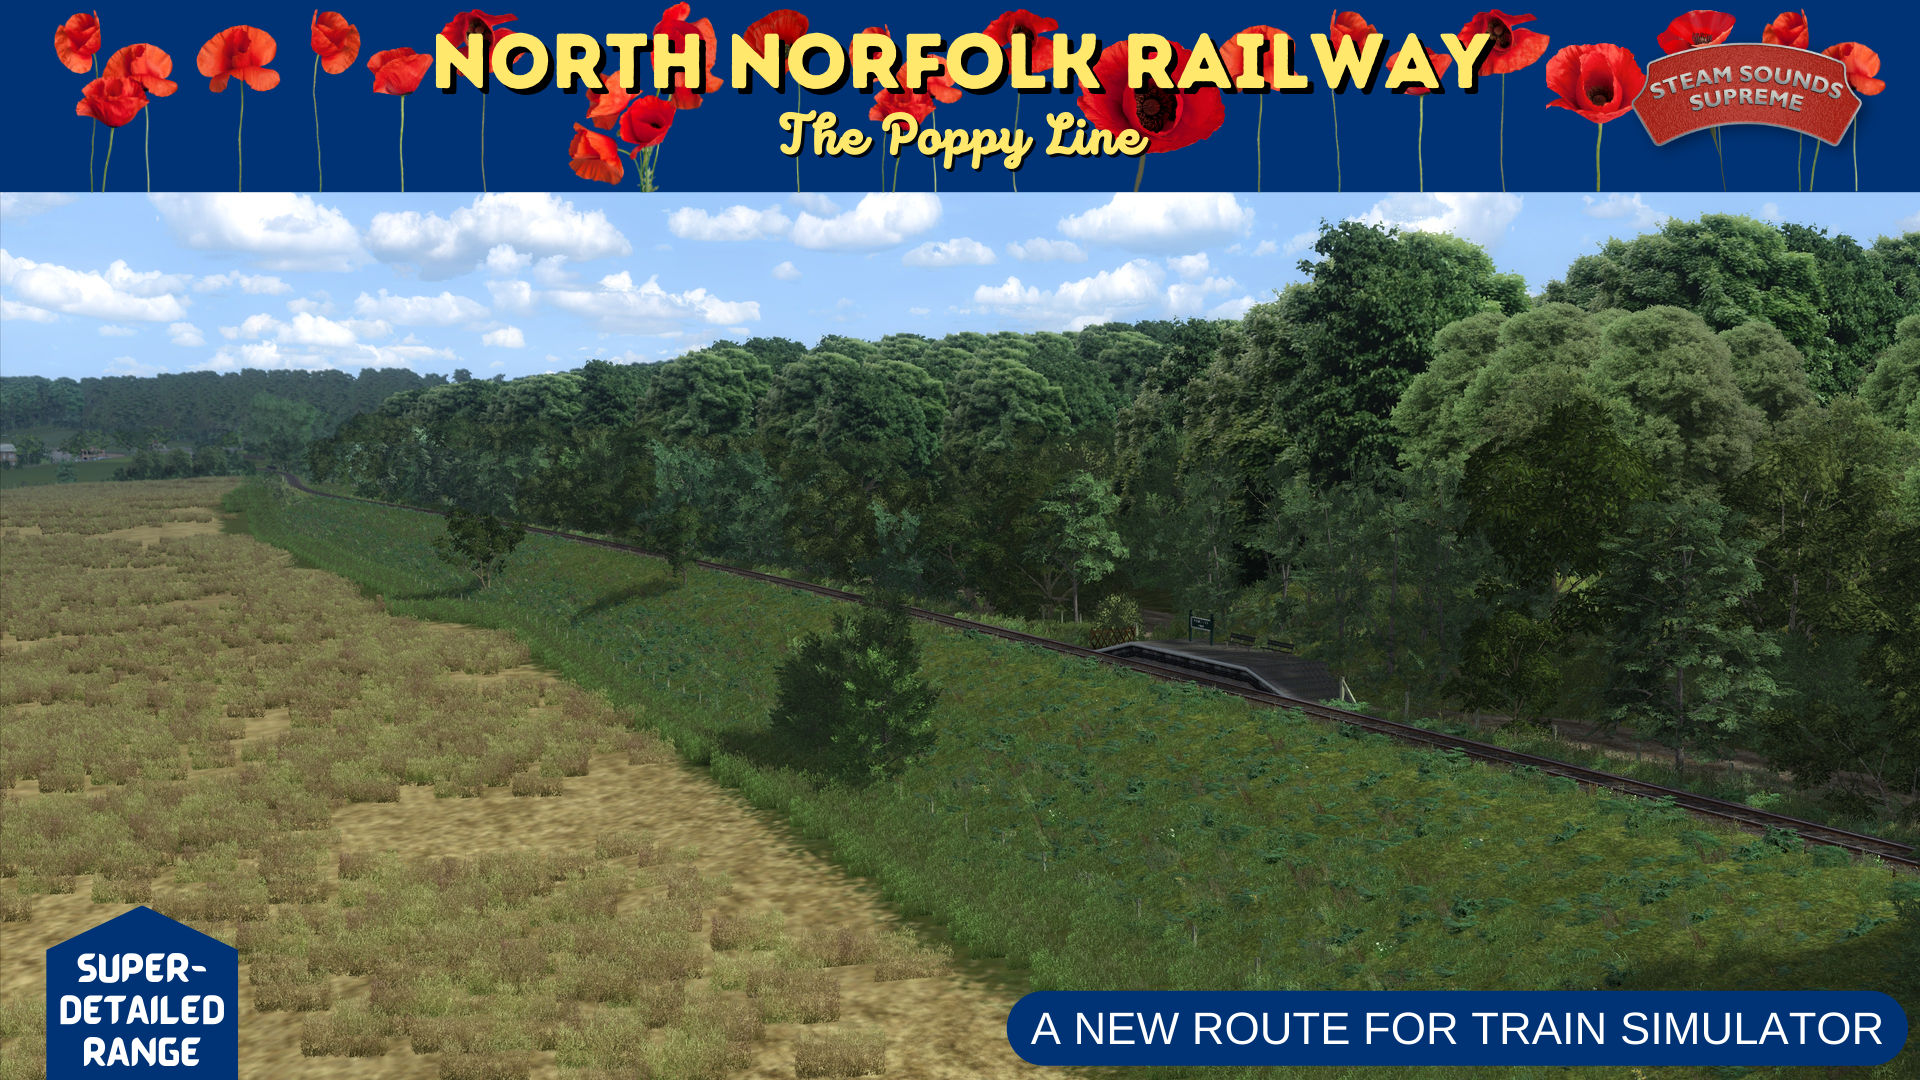 NNR for Train Simulator Image14.png